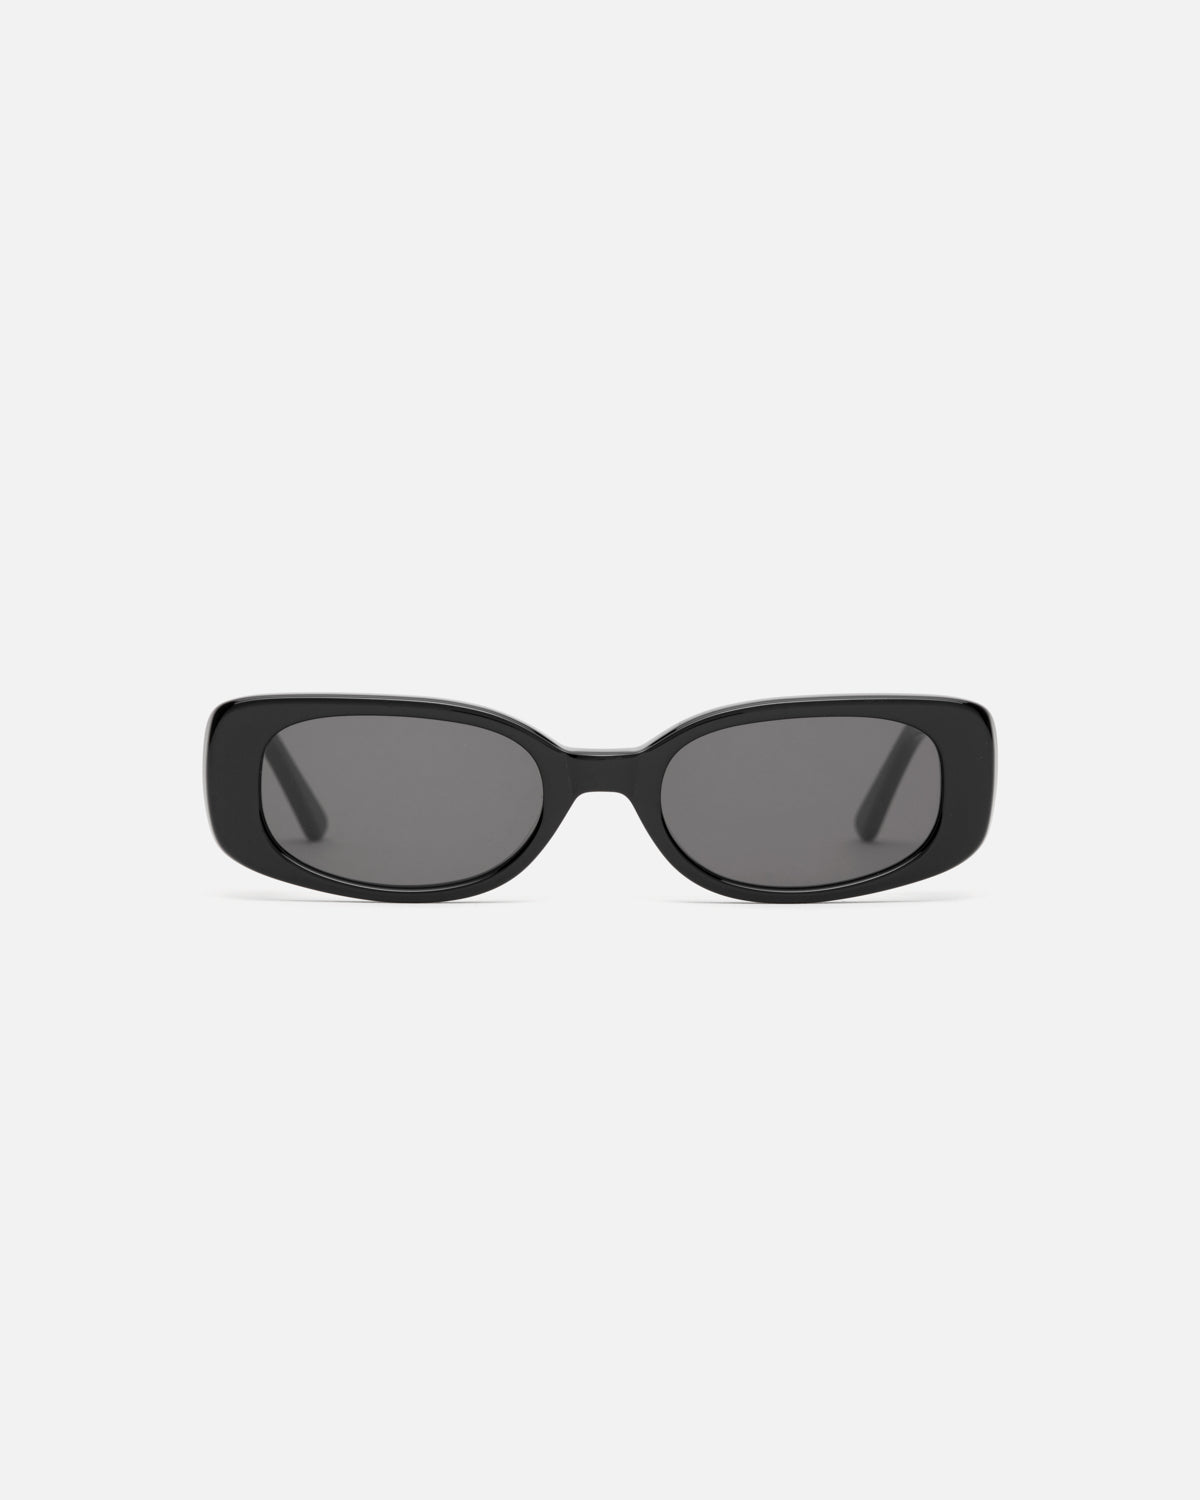 Lu Goldie Solene rectangle Sunglasses in black acetate with black lenses, front